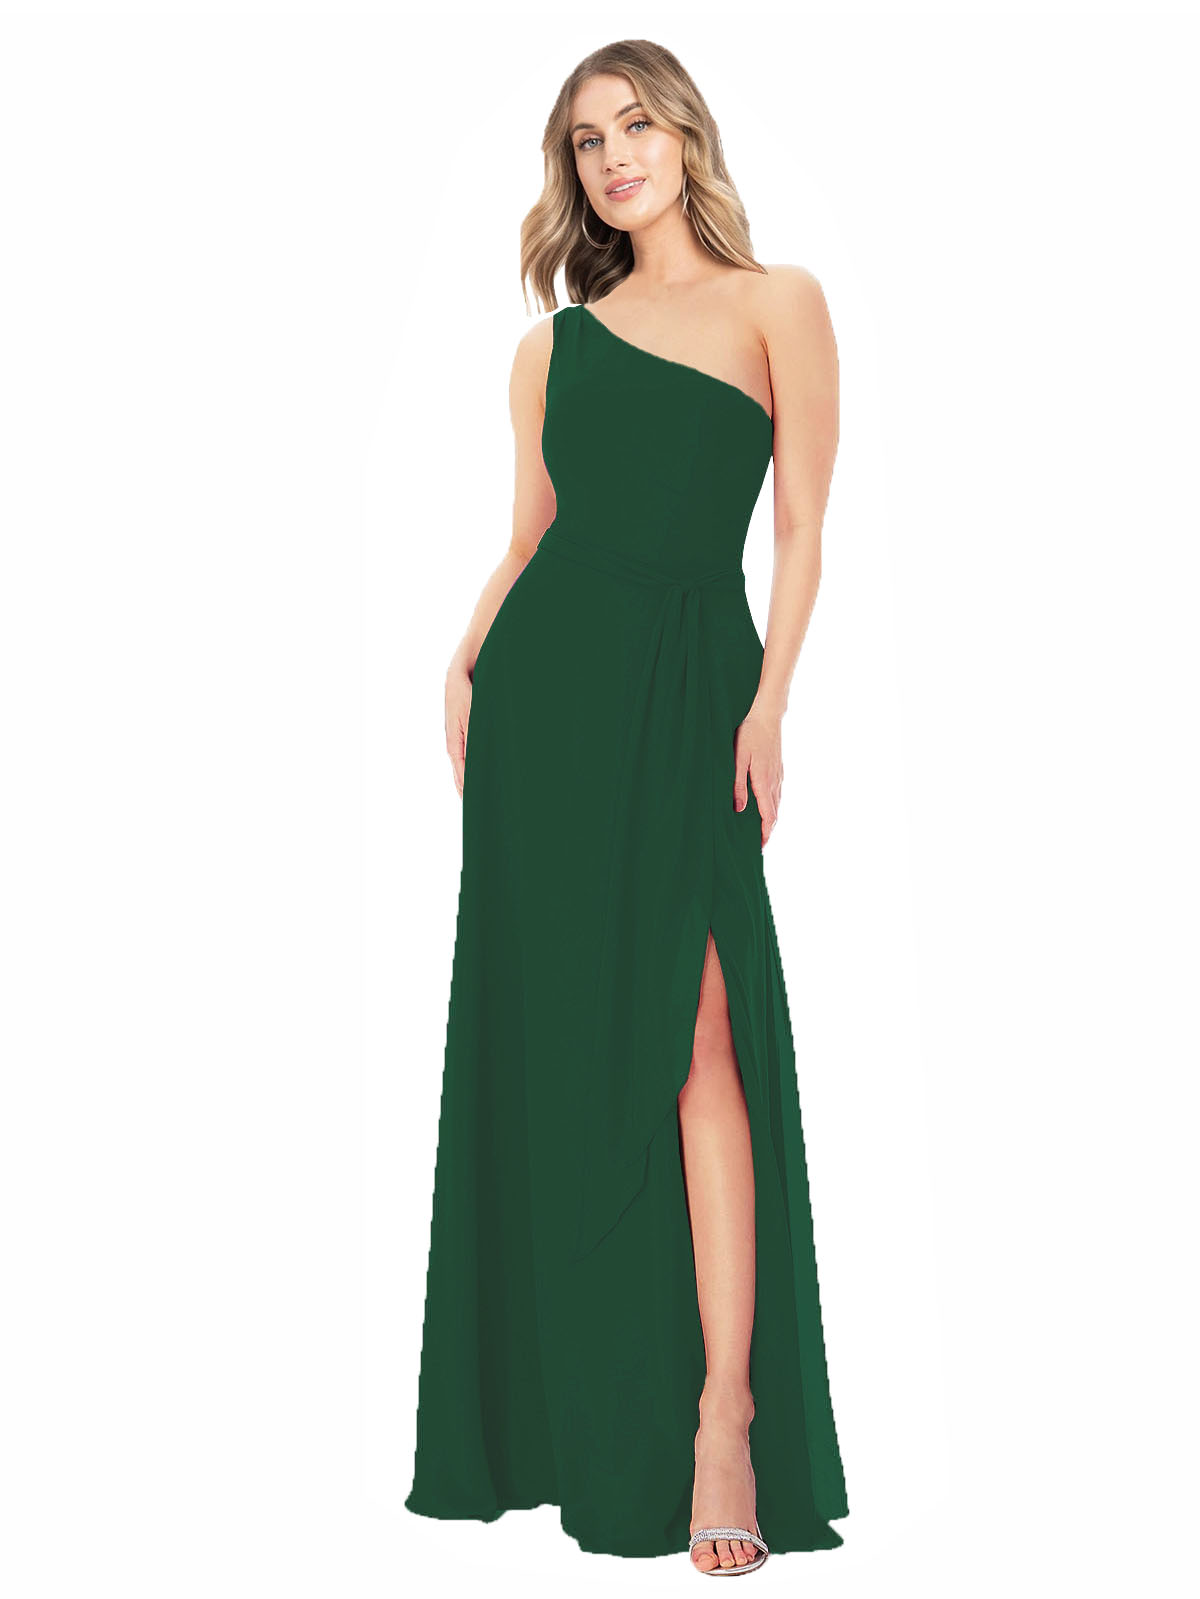 Dark Green A-Line One Shoulder Sleeveless Long Bridesmaid Dress Doris